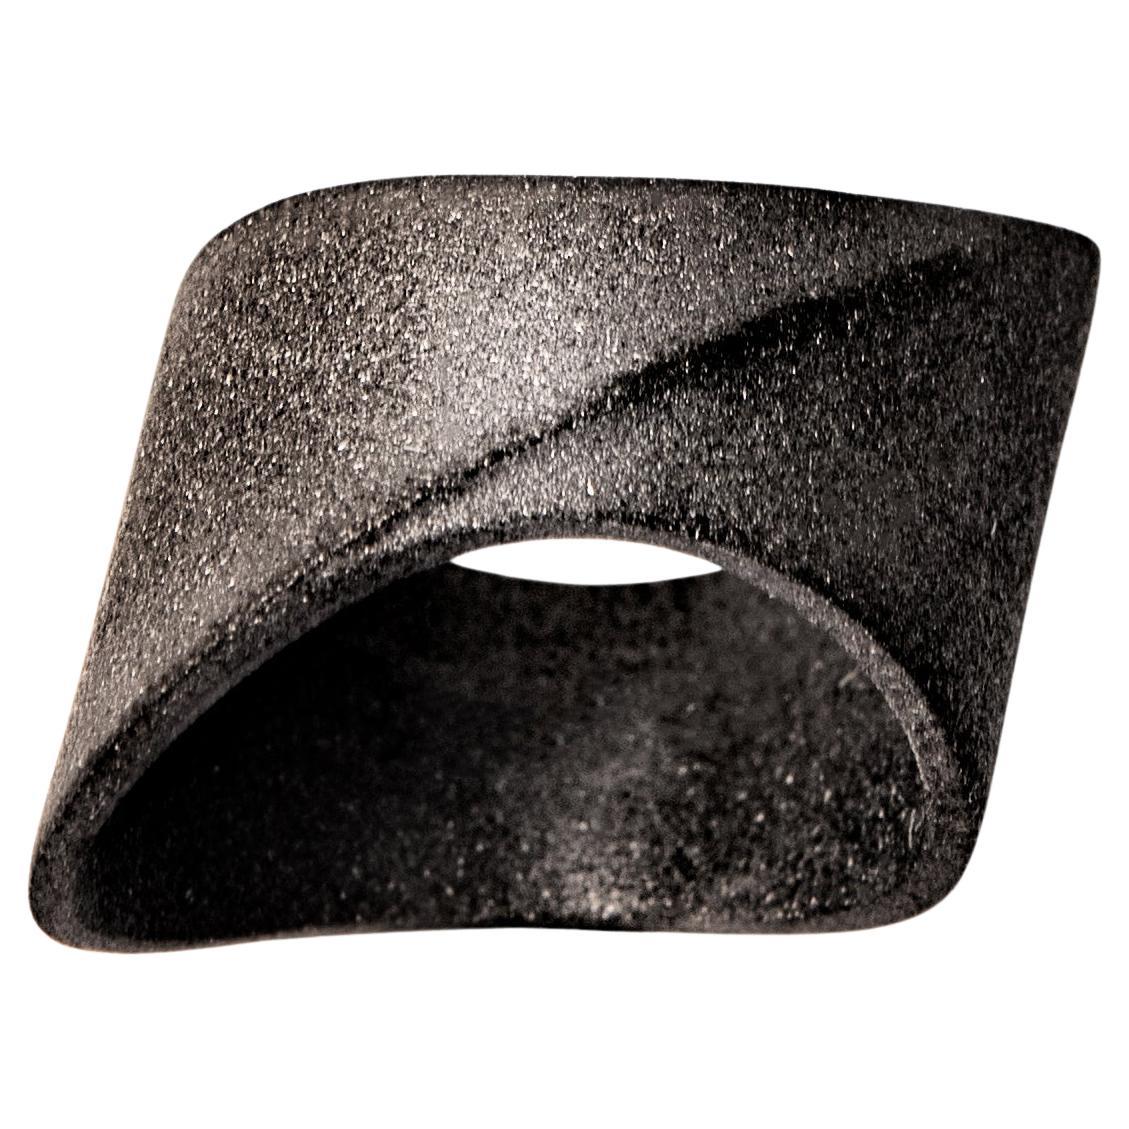 Bandring aus schwarzem Rhodium über sandgestrahltem Sterlingsilber